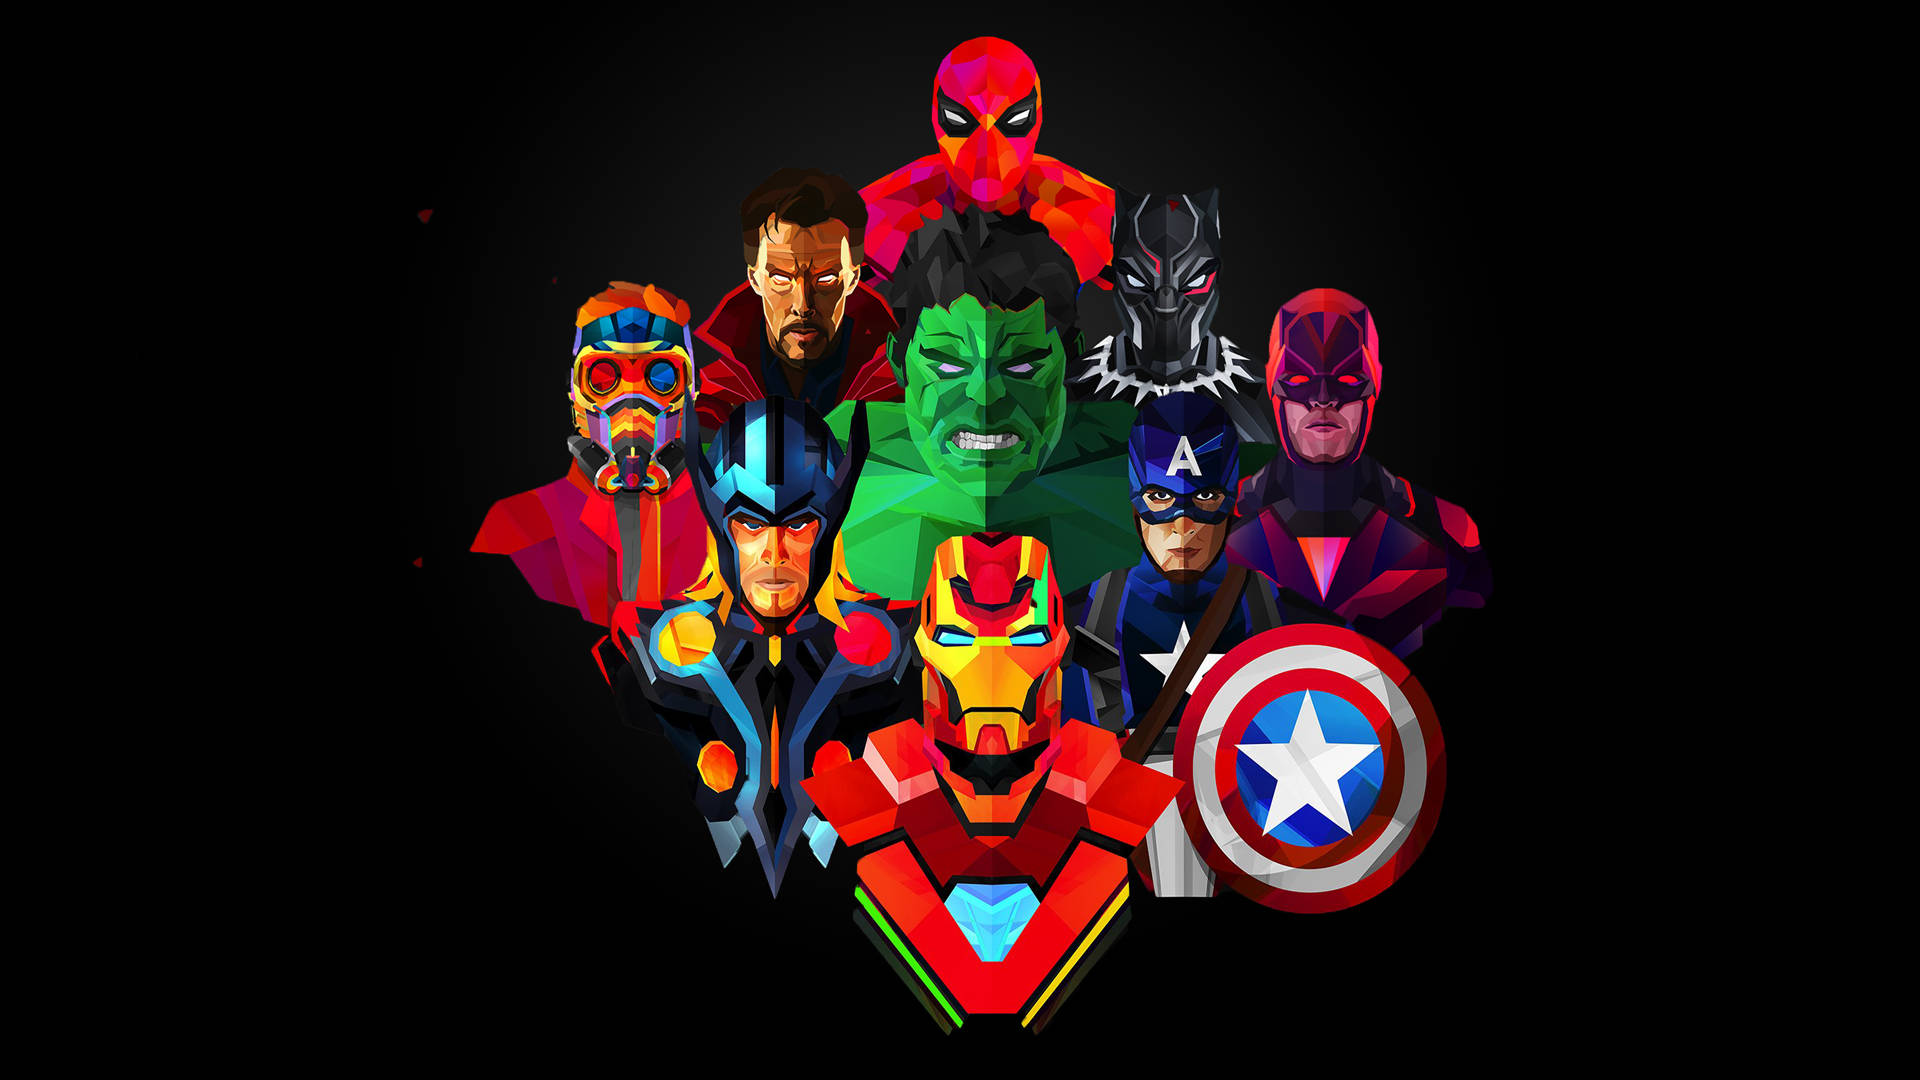 Polygon Art Avengers Background